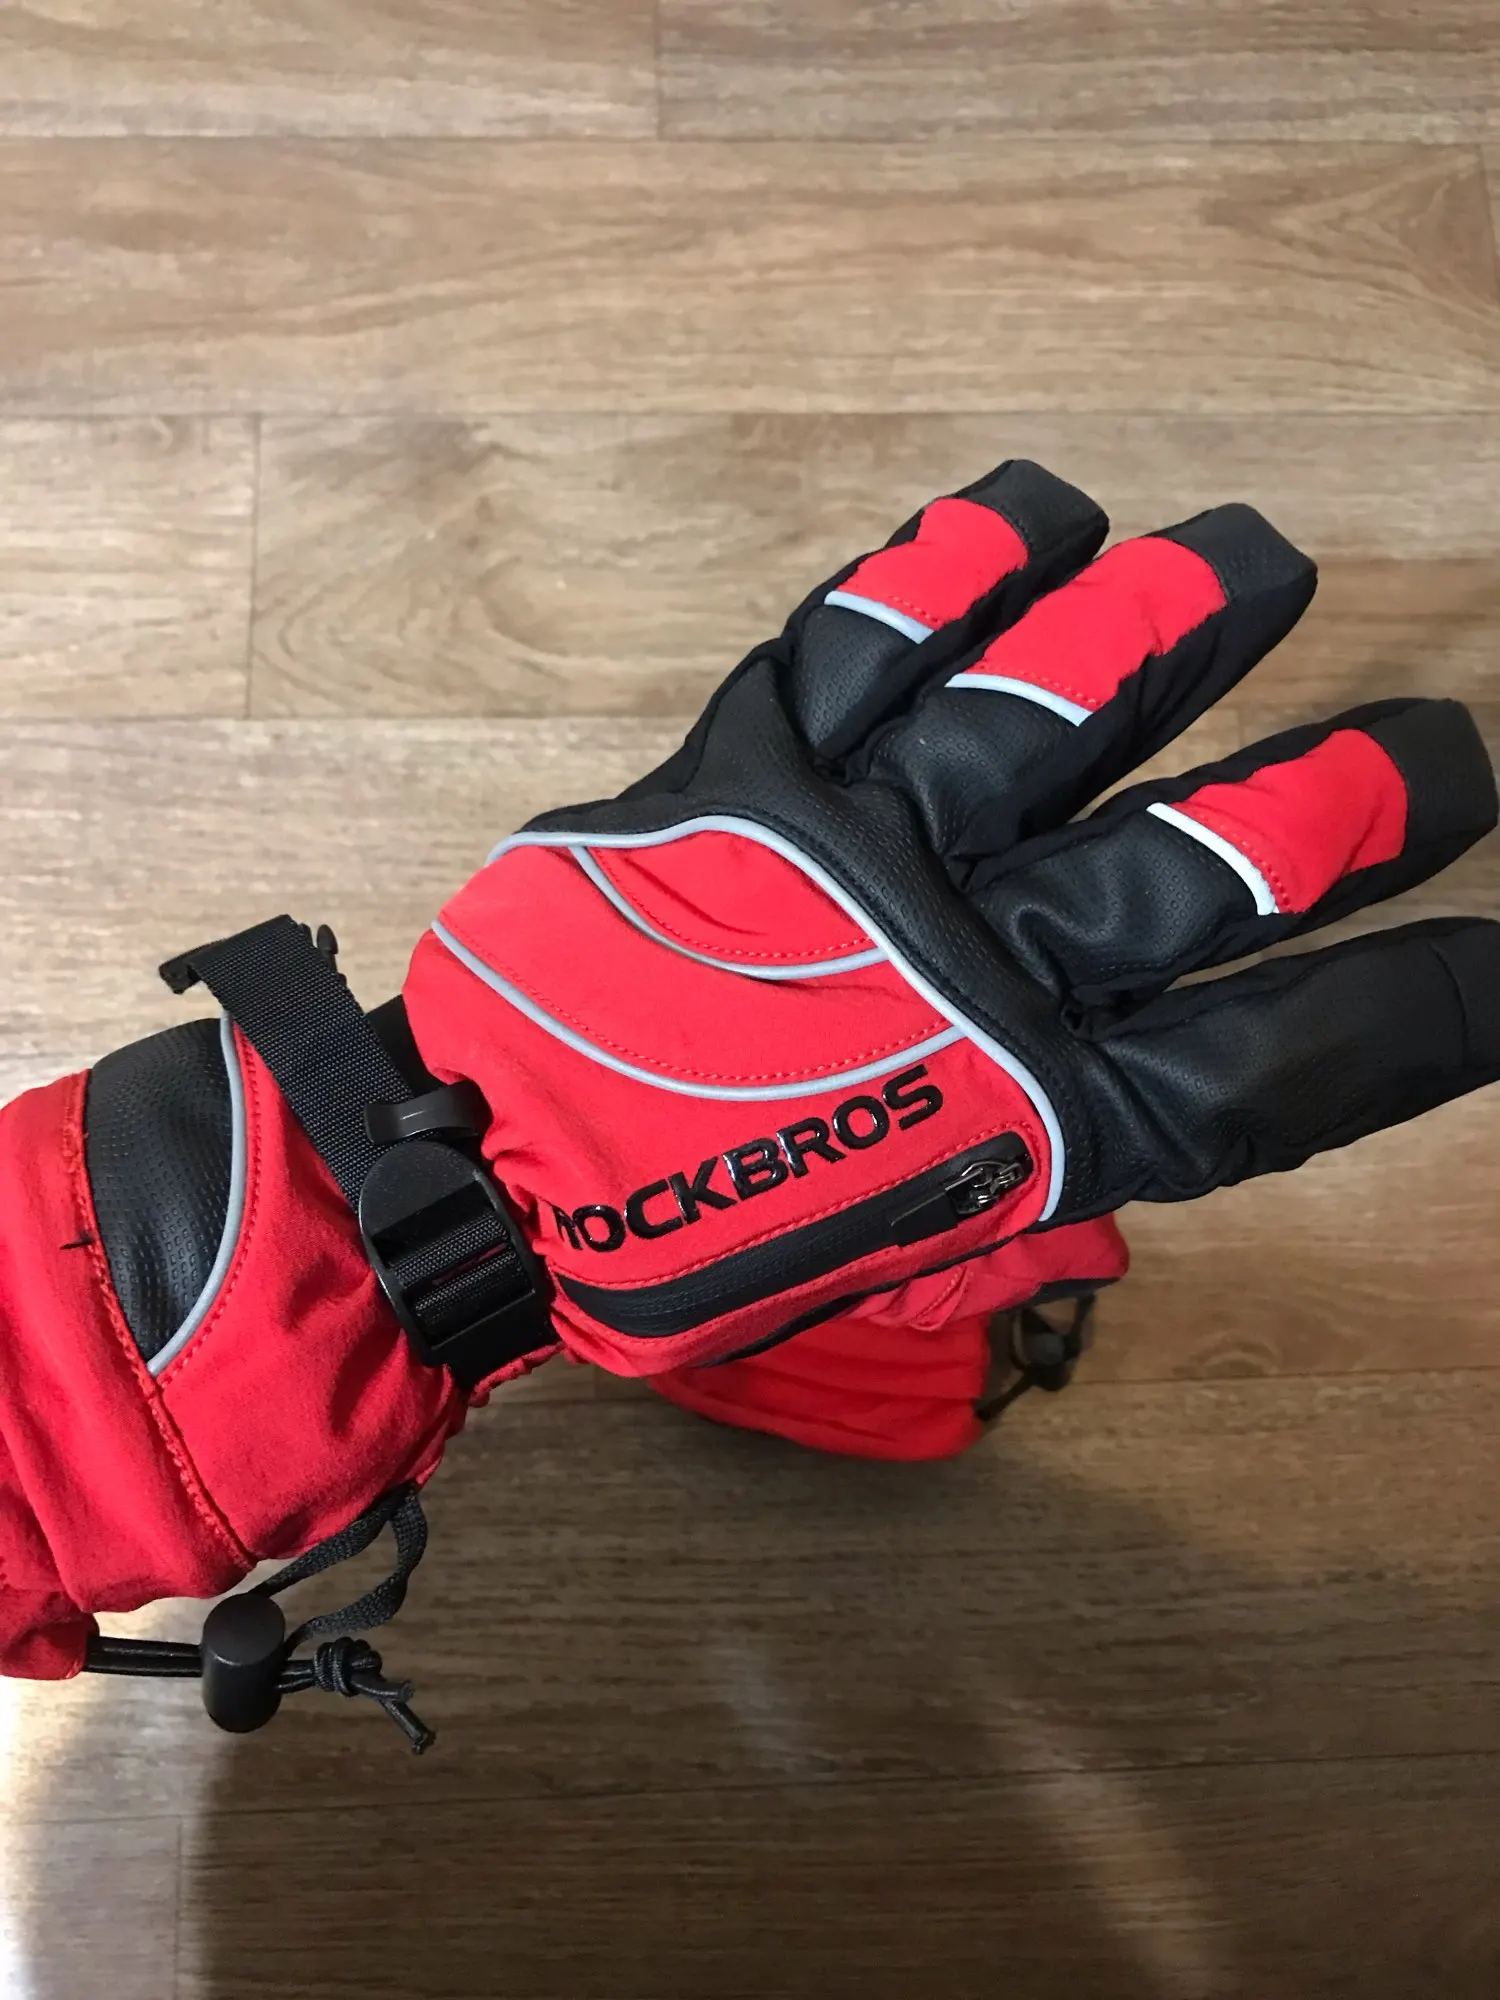 ROCKBROS Ski Gloves Motorcycle Waterproof Fleece Thermal Gloves Snowboard Snowmobile Gloves Men Women Winter Snow Bike Gloves photo review